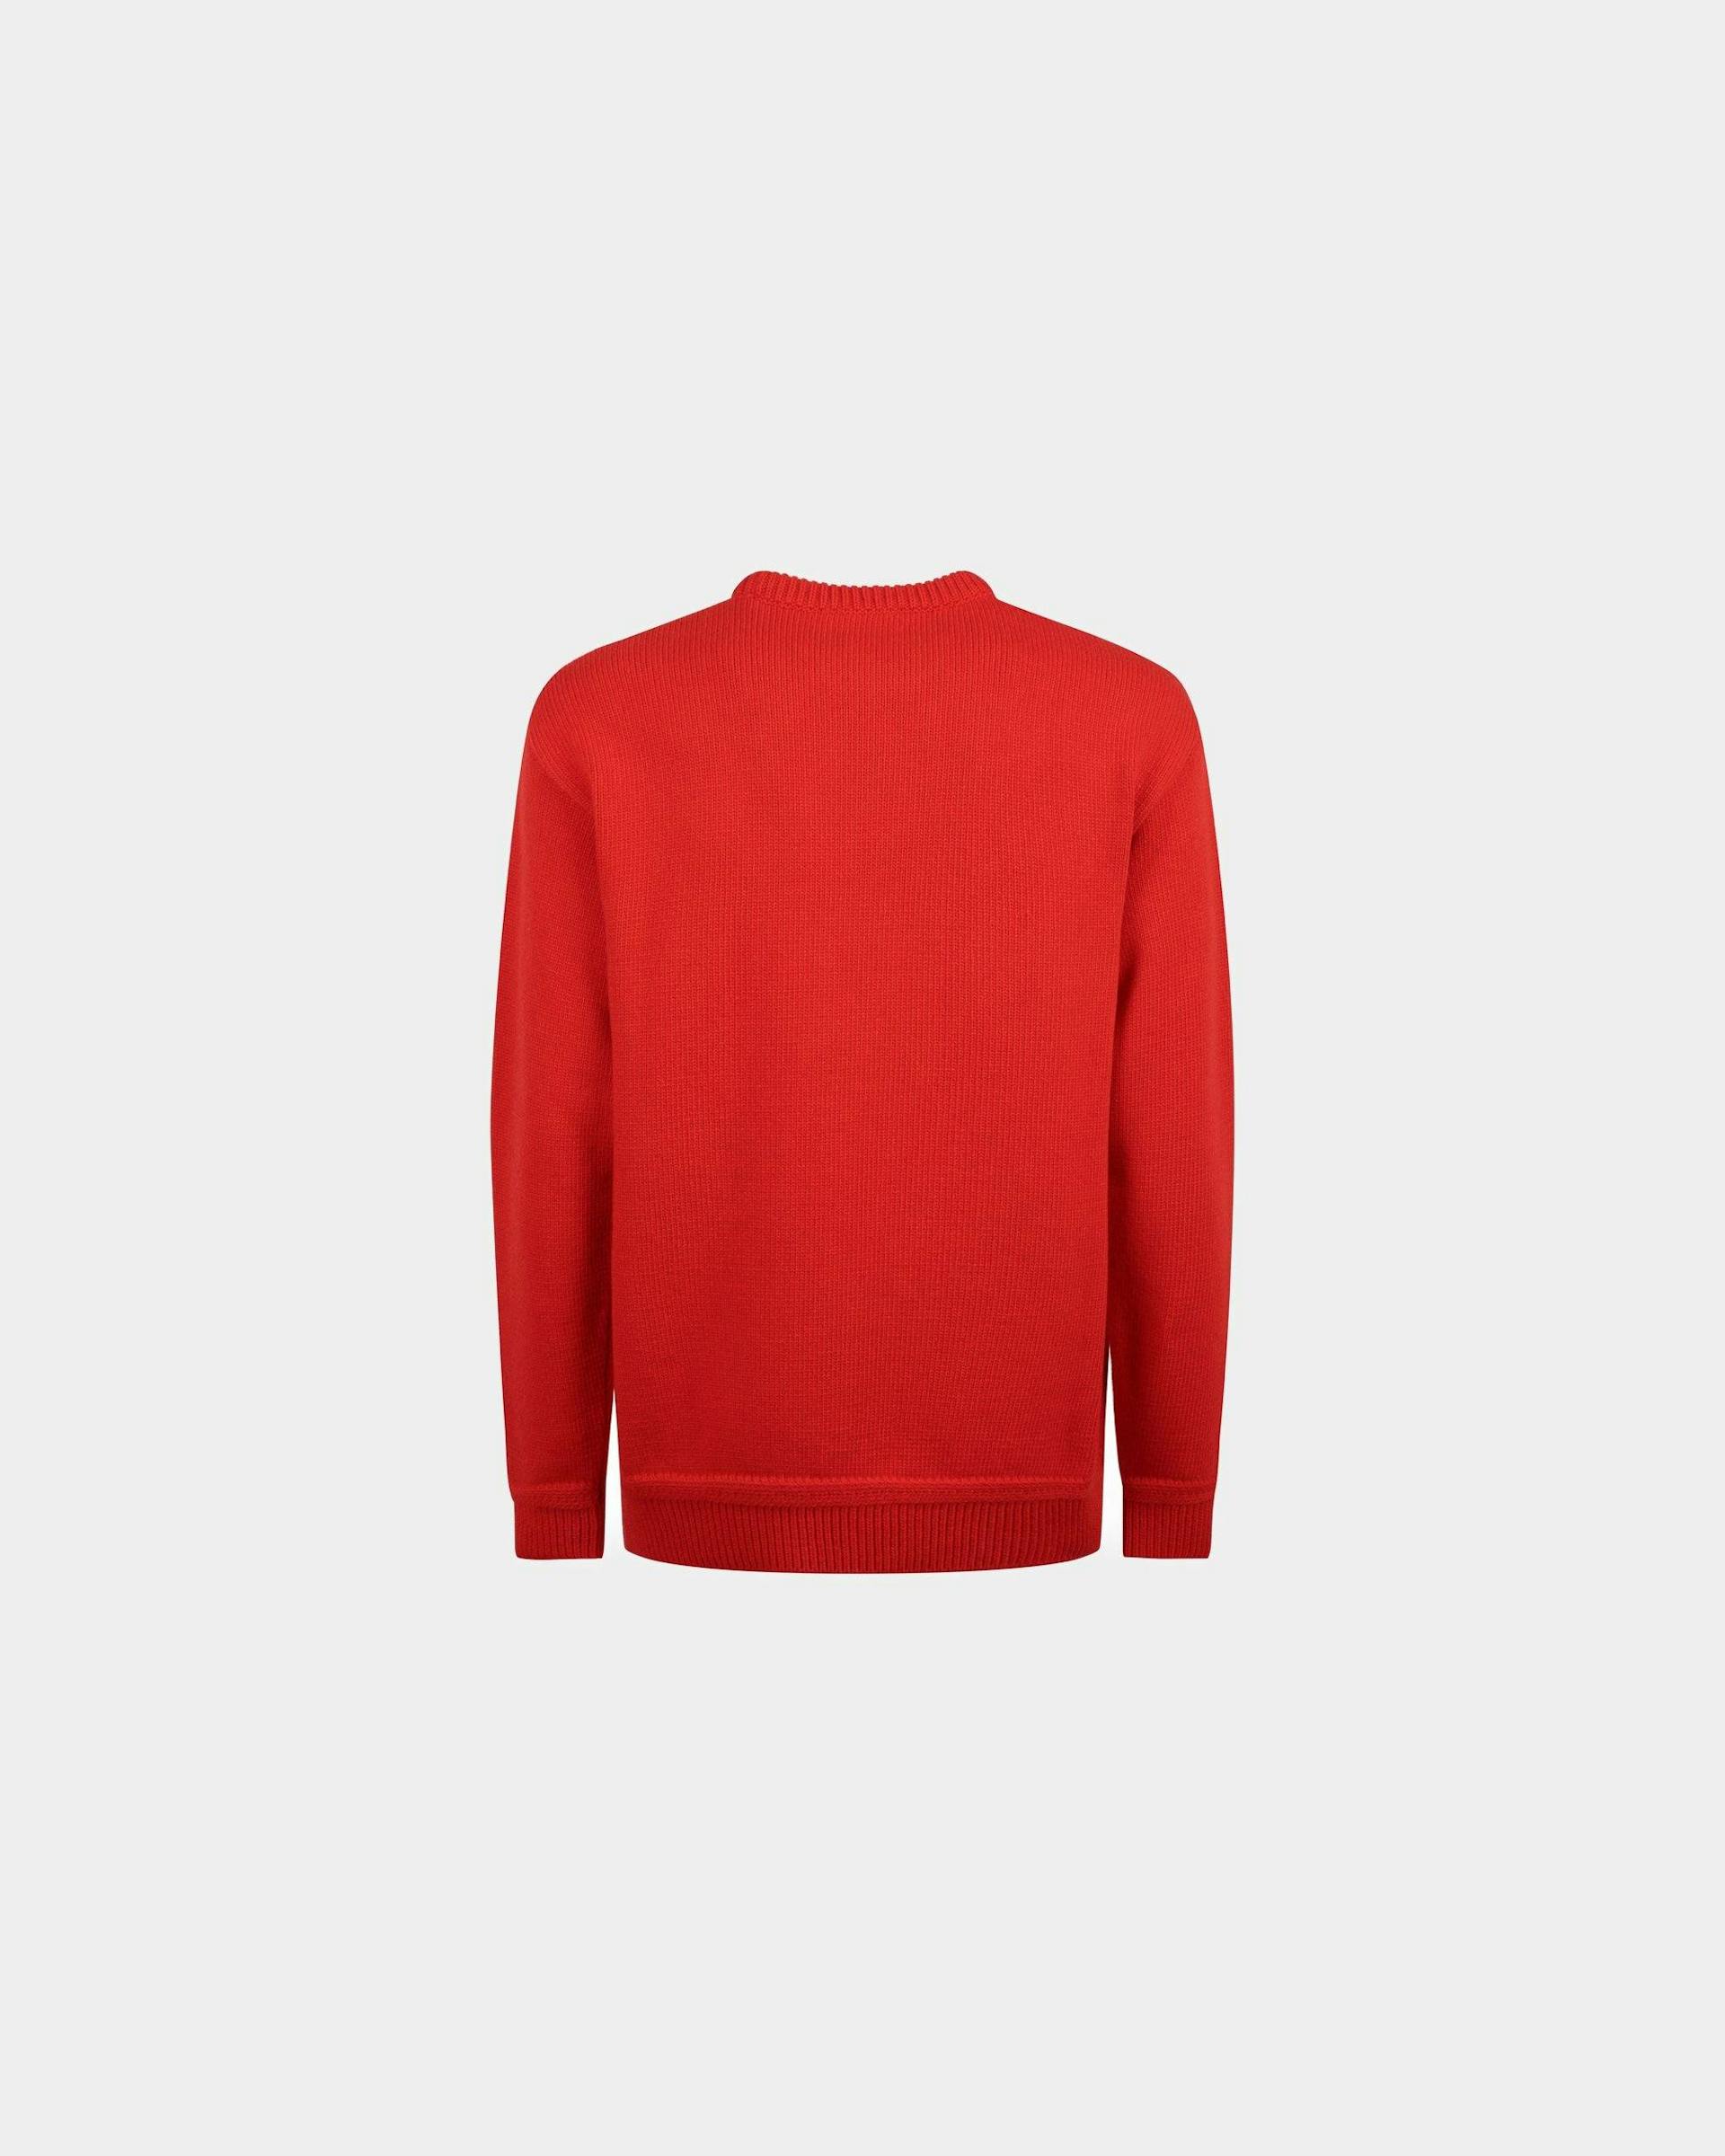 Men's Sweater In Red Wool | Bally | Still Life Back